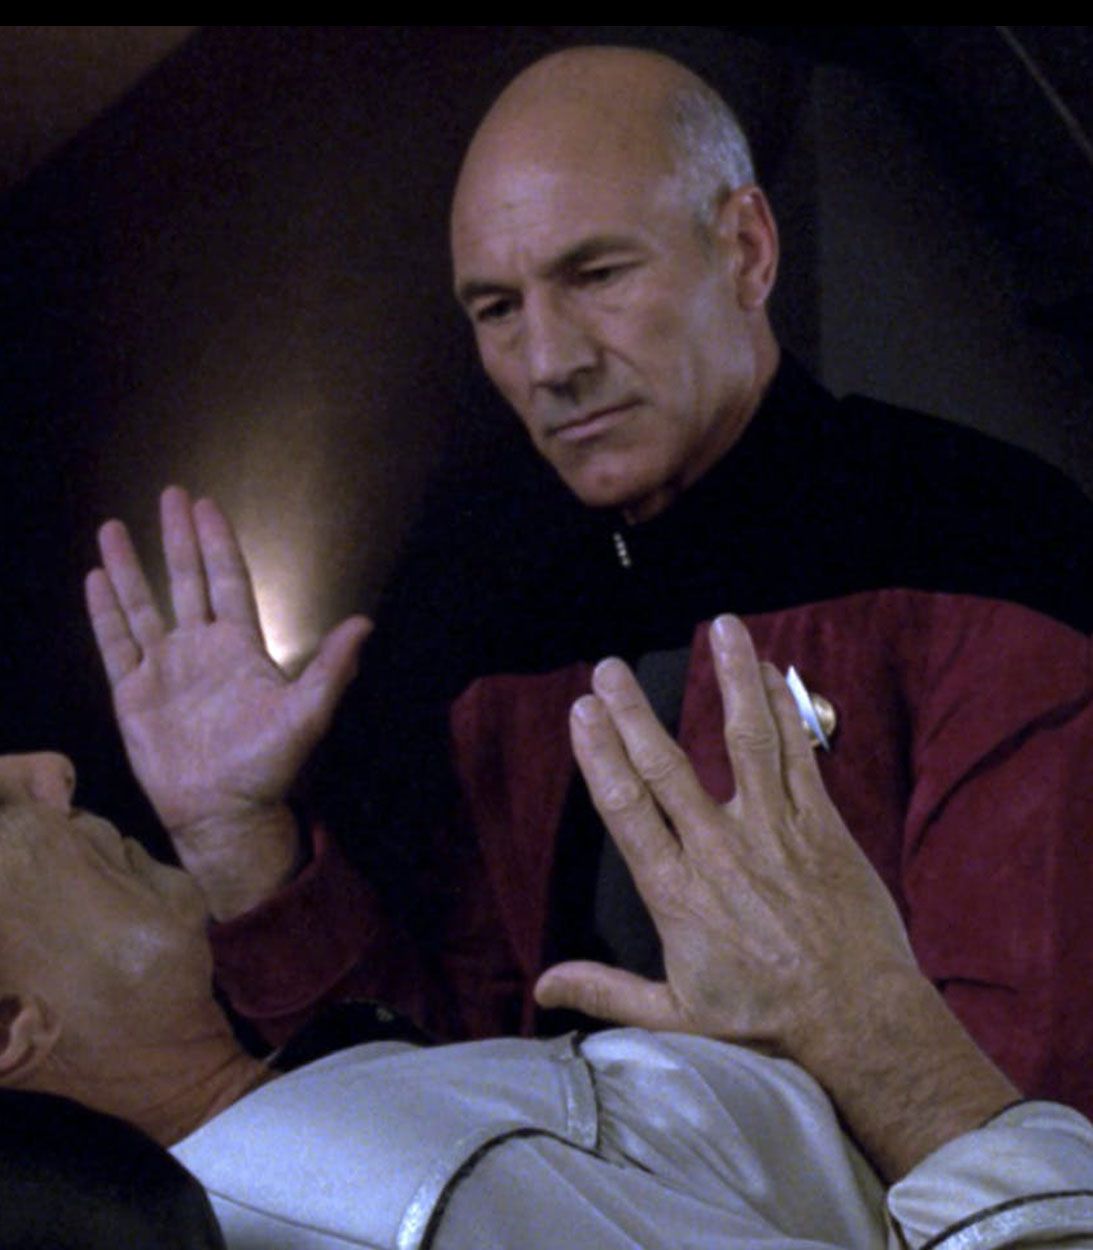 Picard and Sarek in Star Trek: The Next Generation